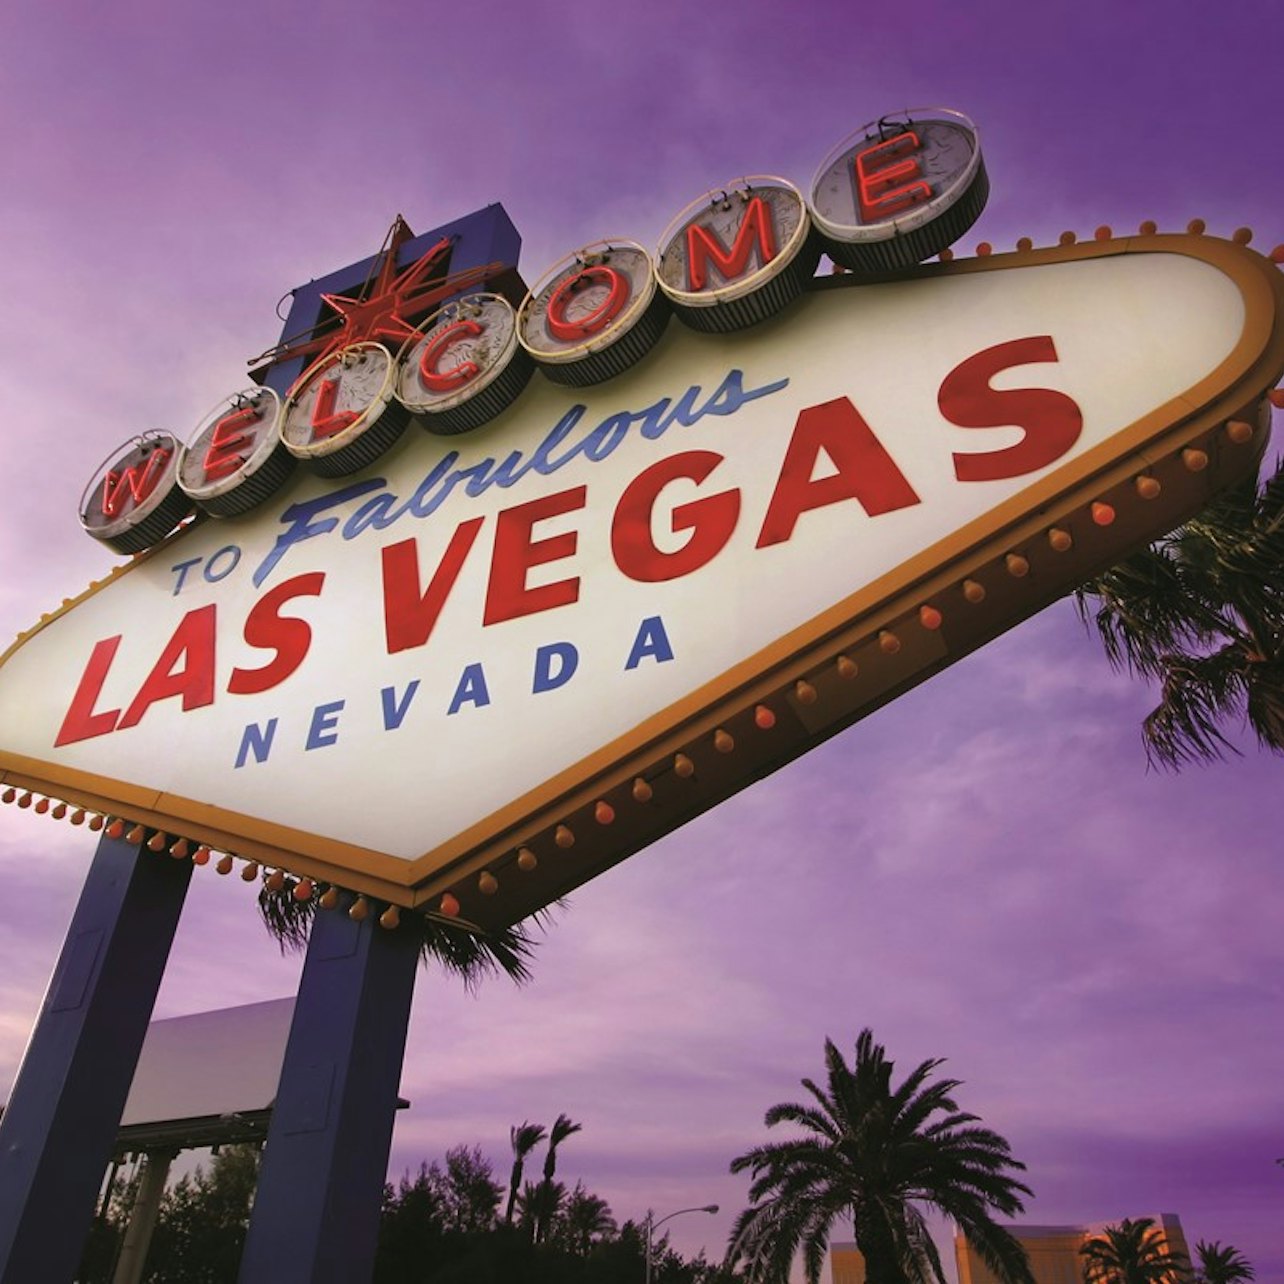 Big Bus Las Vegas: Night Tour - Accommodations in Las Vegas